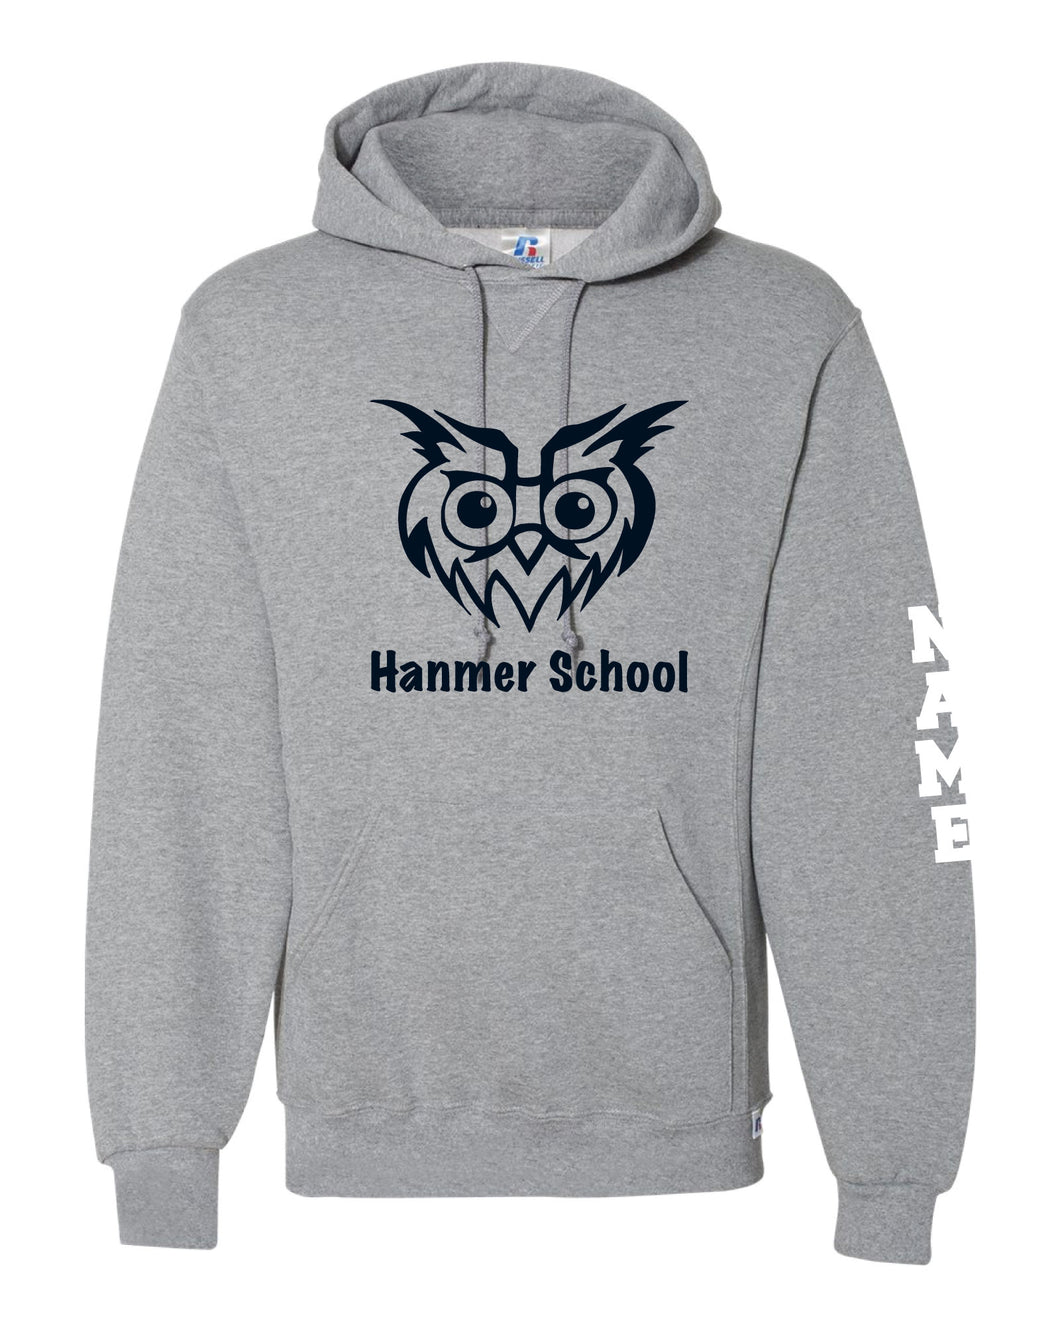 Hanmer School Russell Athletic Cotton Hoodie - Gray - 5KounT